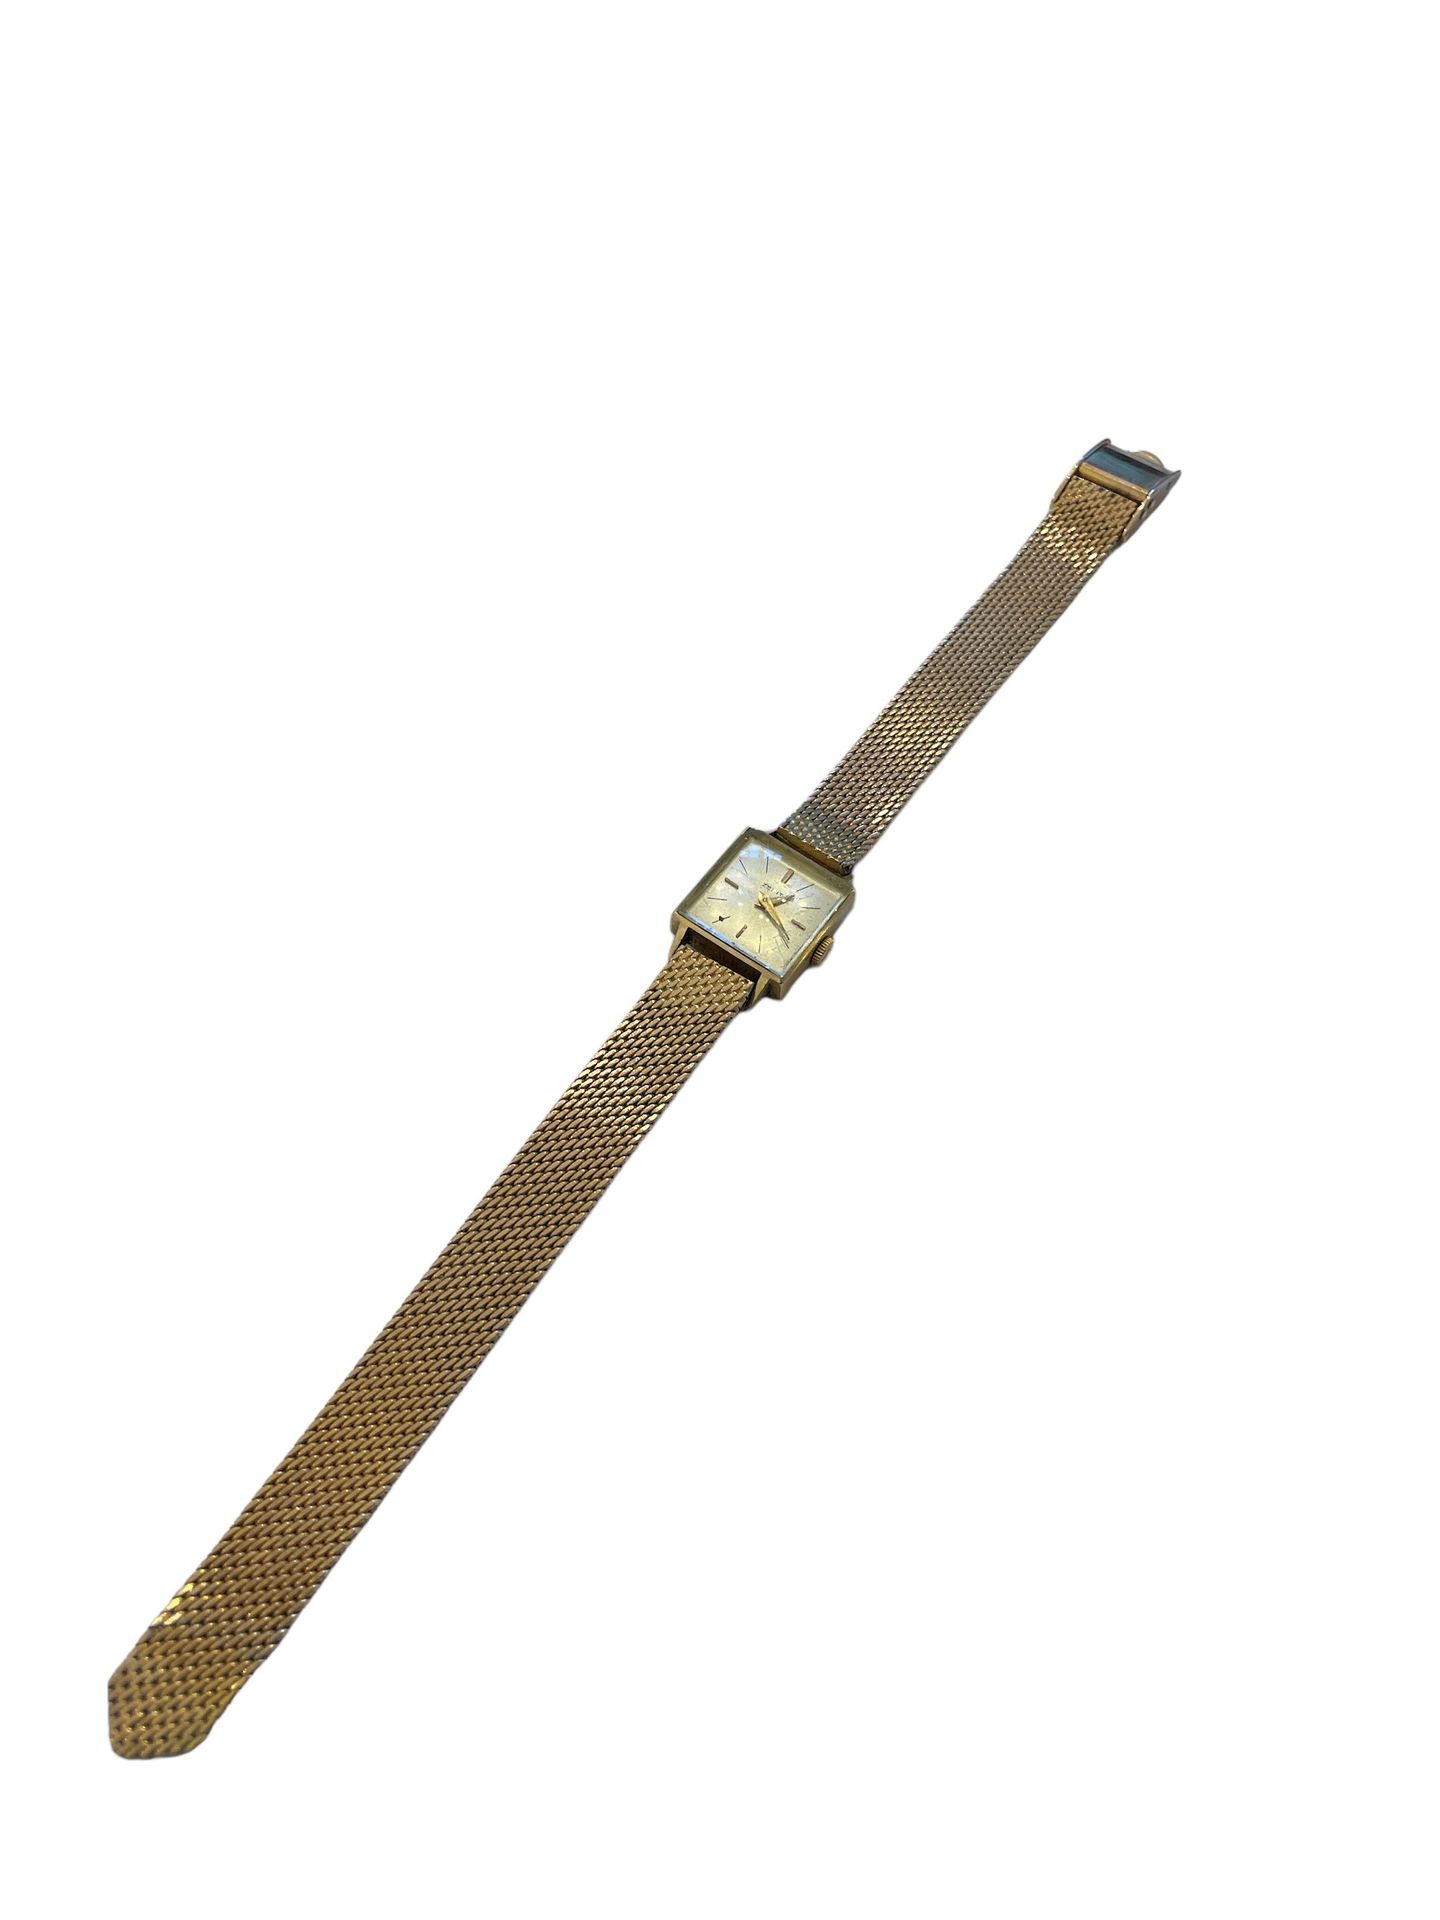 Null 泽尼特
金色手表，方形表壳，金色金属表带。
毛重：24克